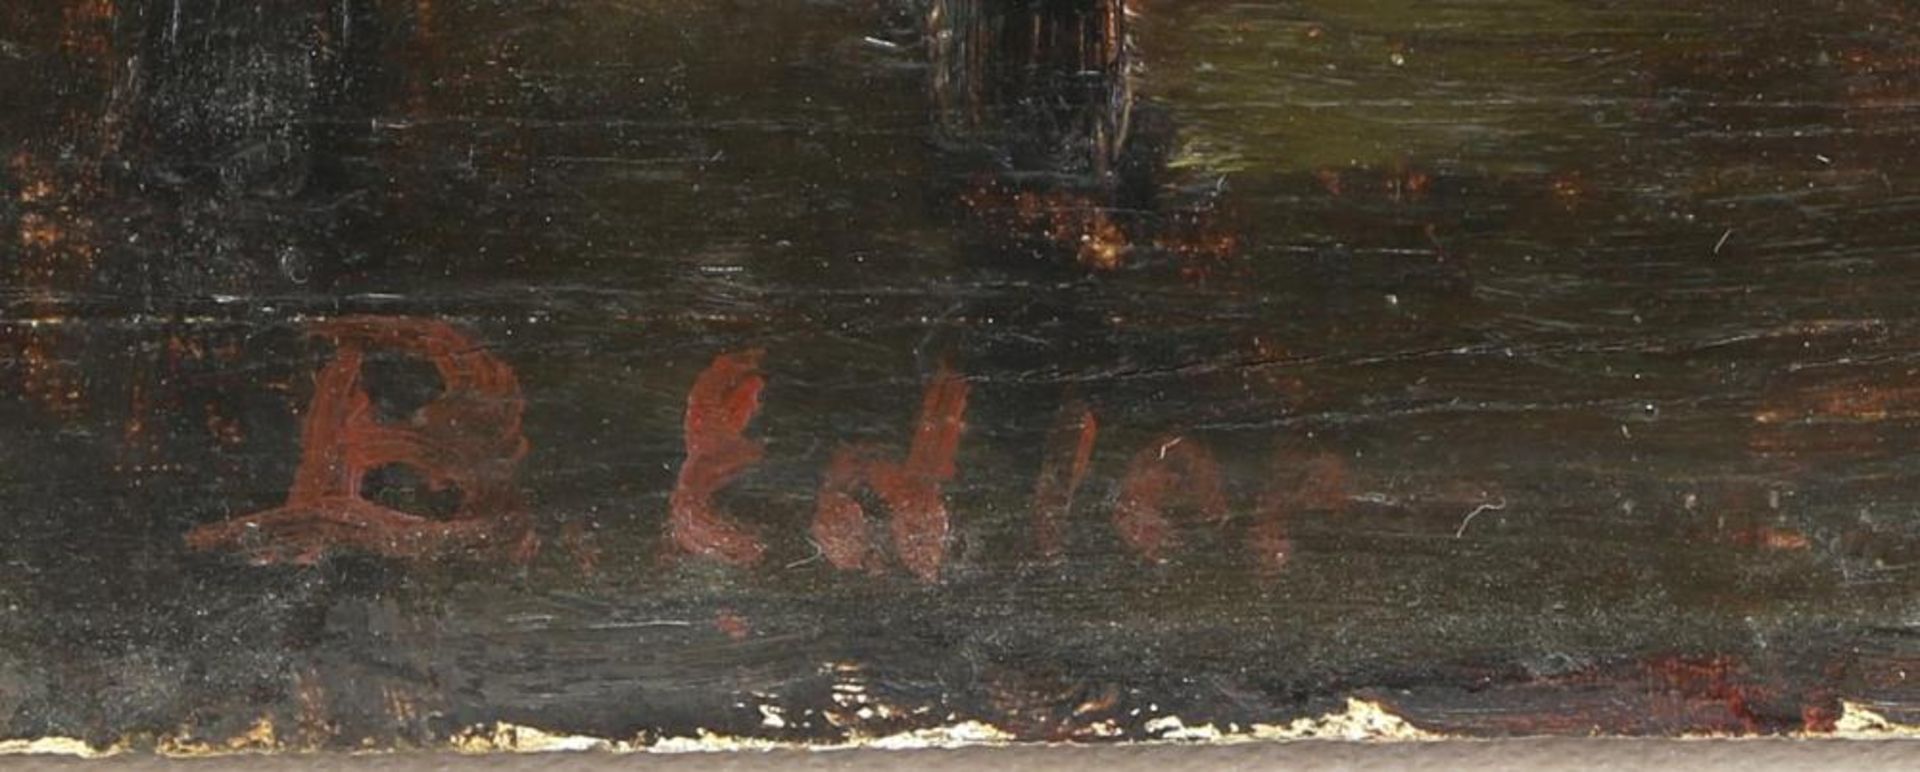 Interieurszene. P. Edler um 1900. Kneipeninneres im Alpenraum. Öl auf Holz. Unten rechts signiert. - Bild 2 aus 4